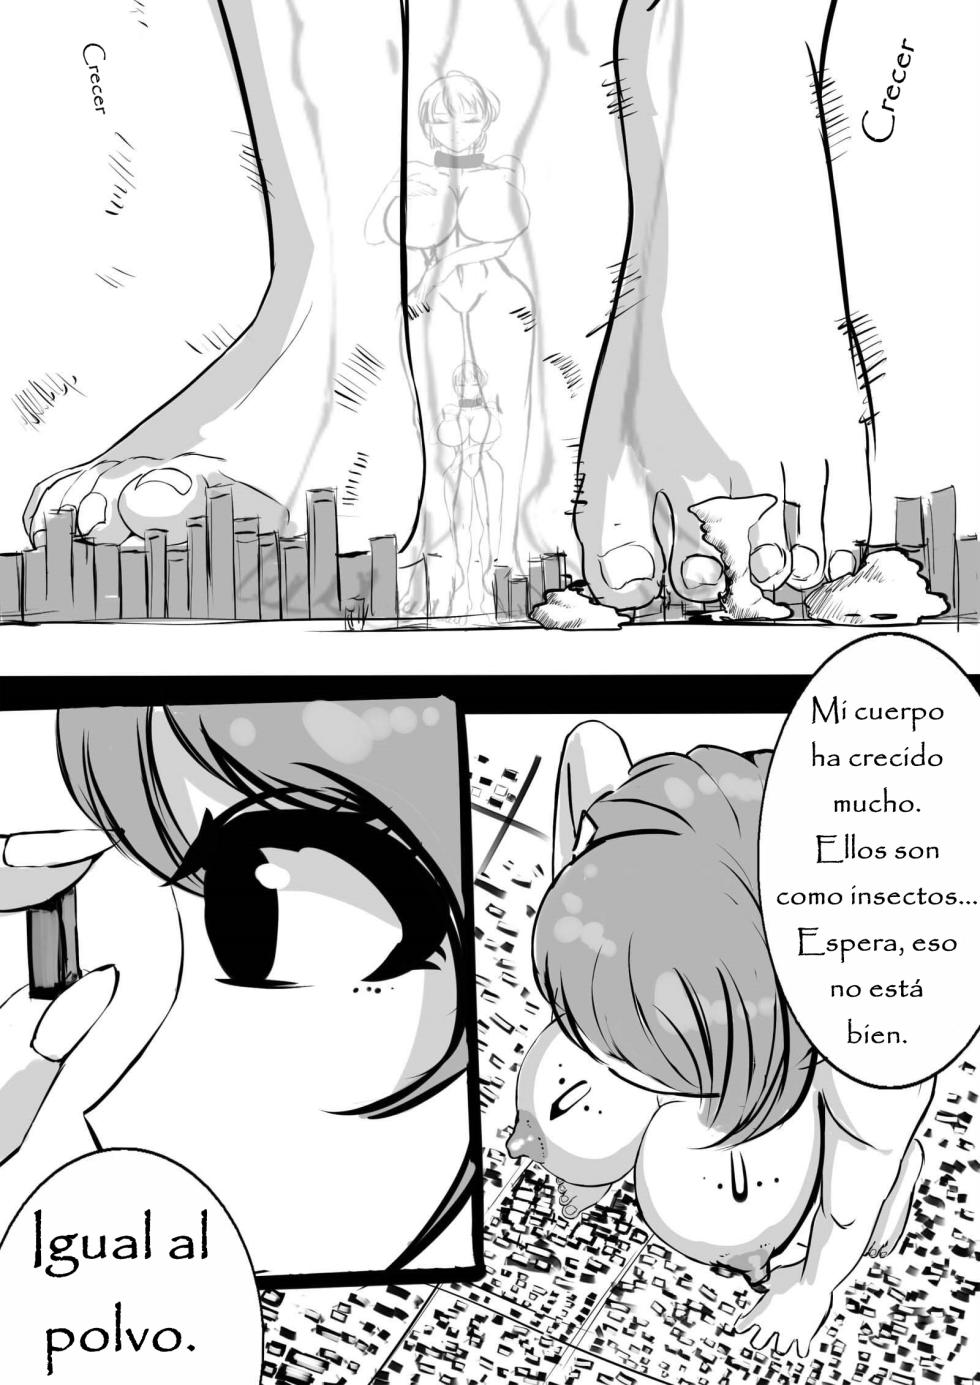 [gabbit] Homemade comic Alien Woman Attacks the City (Spanish) - Page 7